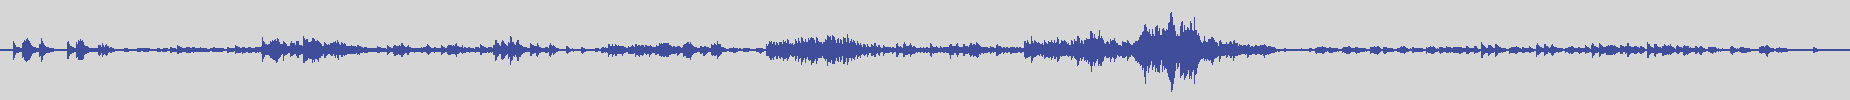 big_music_classic [BMC007] Claude Debussy, Corrado Rossi - Voiles [] audio wave form